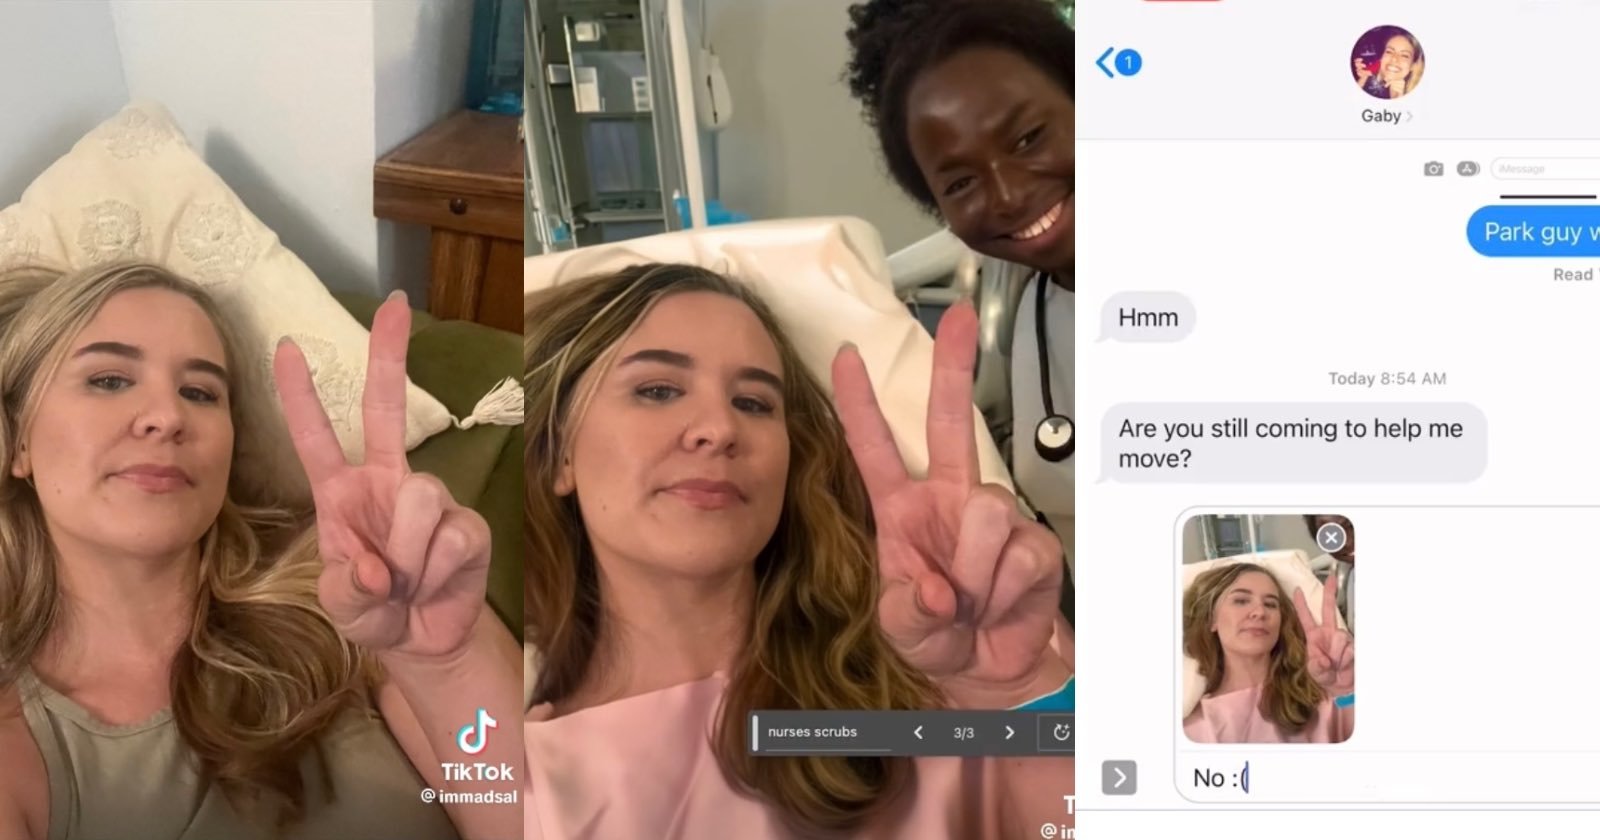 Woman Uses Photoshops New AI Tool to Easily Create a Hospital Bed Selfie